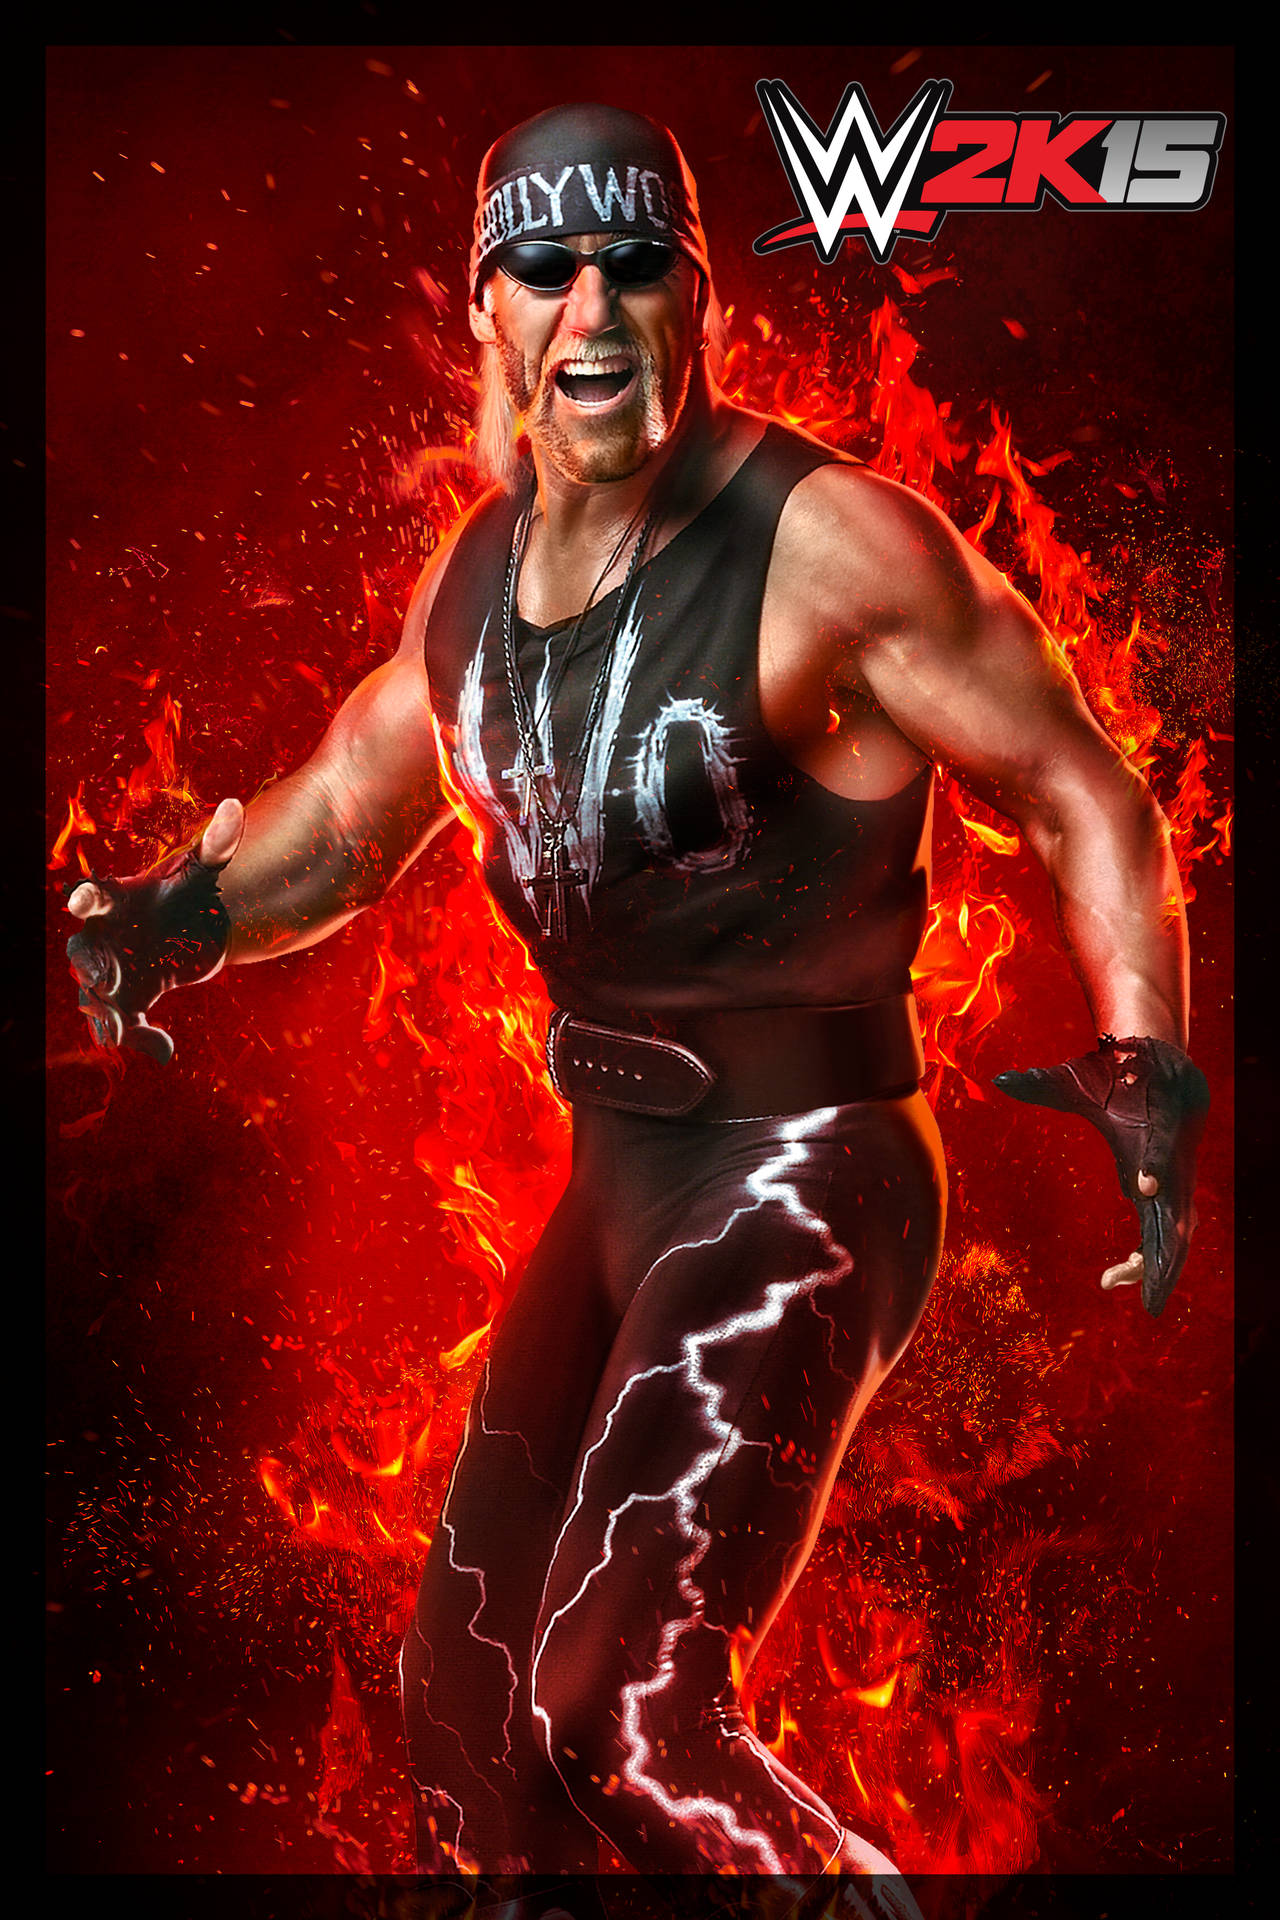 Hulk Hogan W2k15 Fiery Poster Background